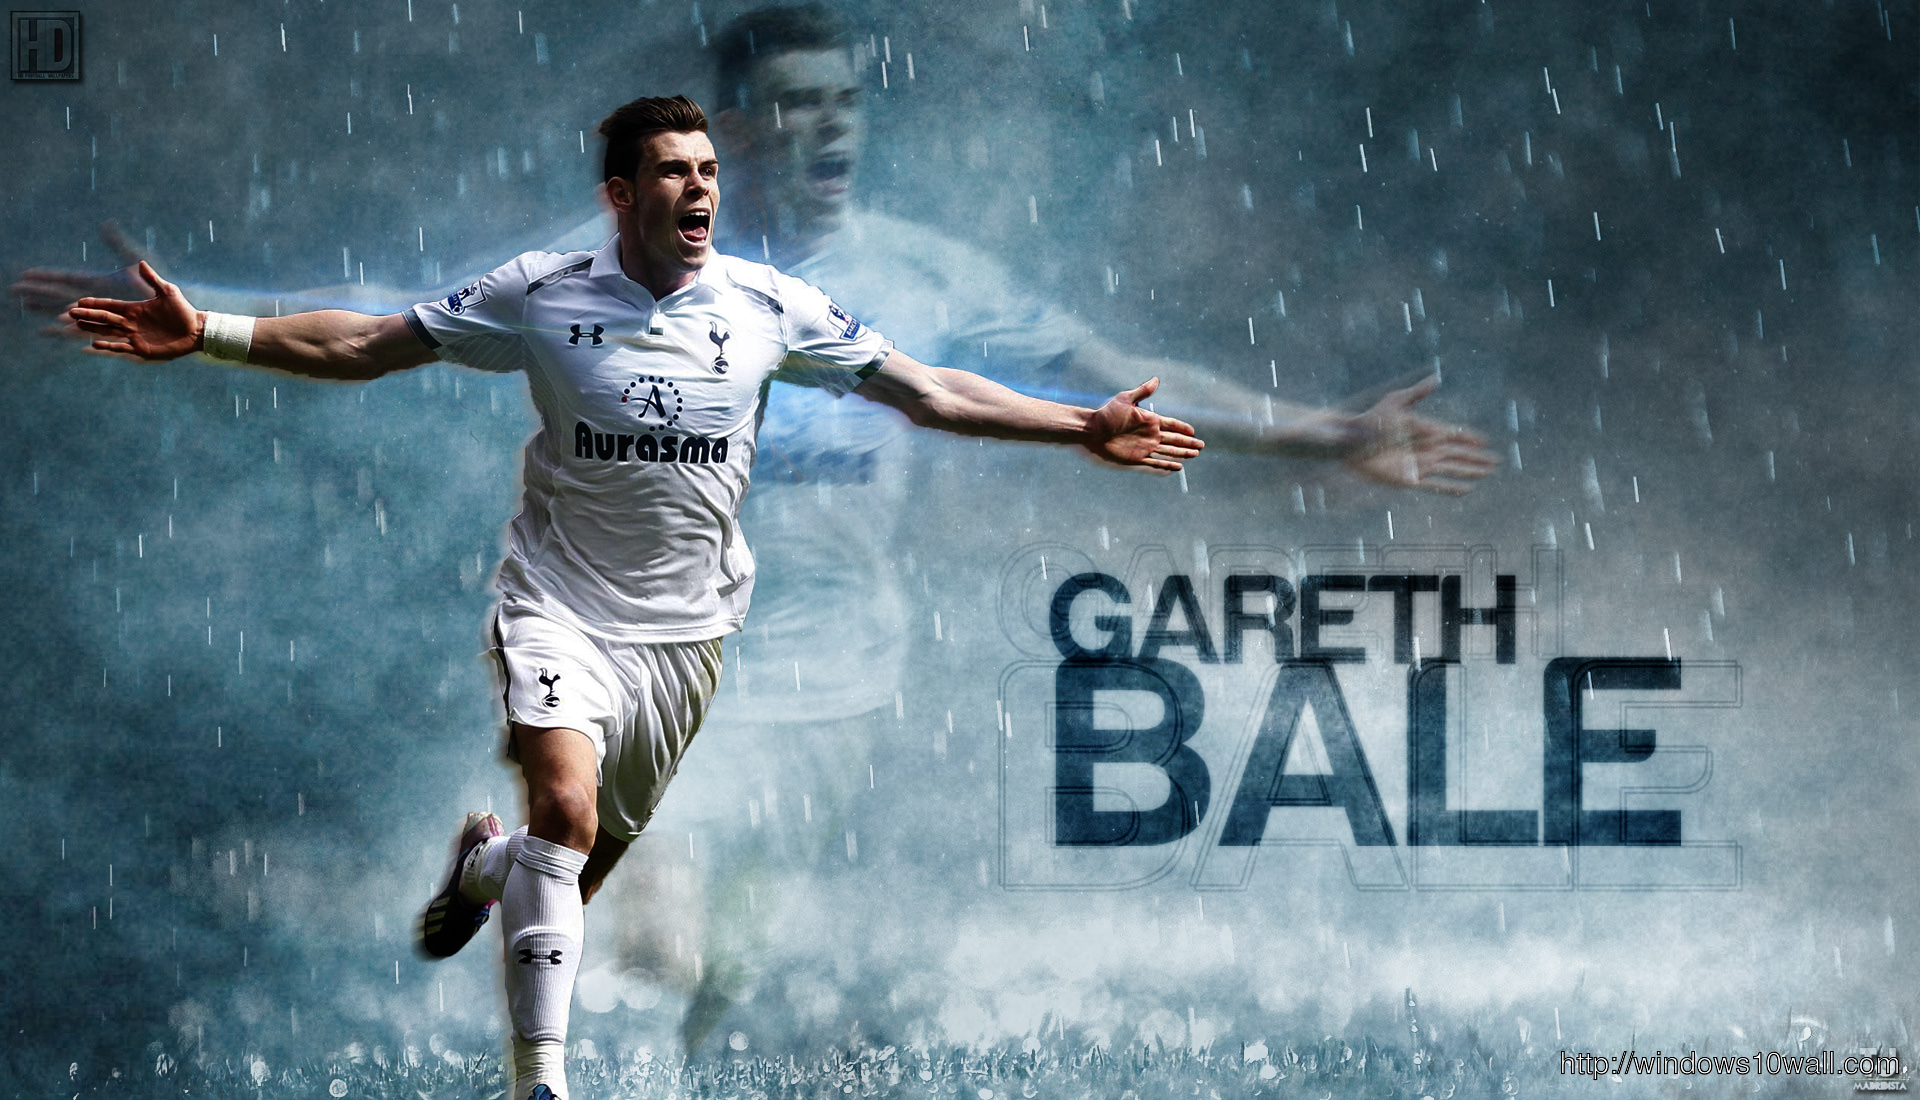 Gareth Bale Real Madrid World Cup 2014 Wallpaper